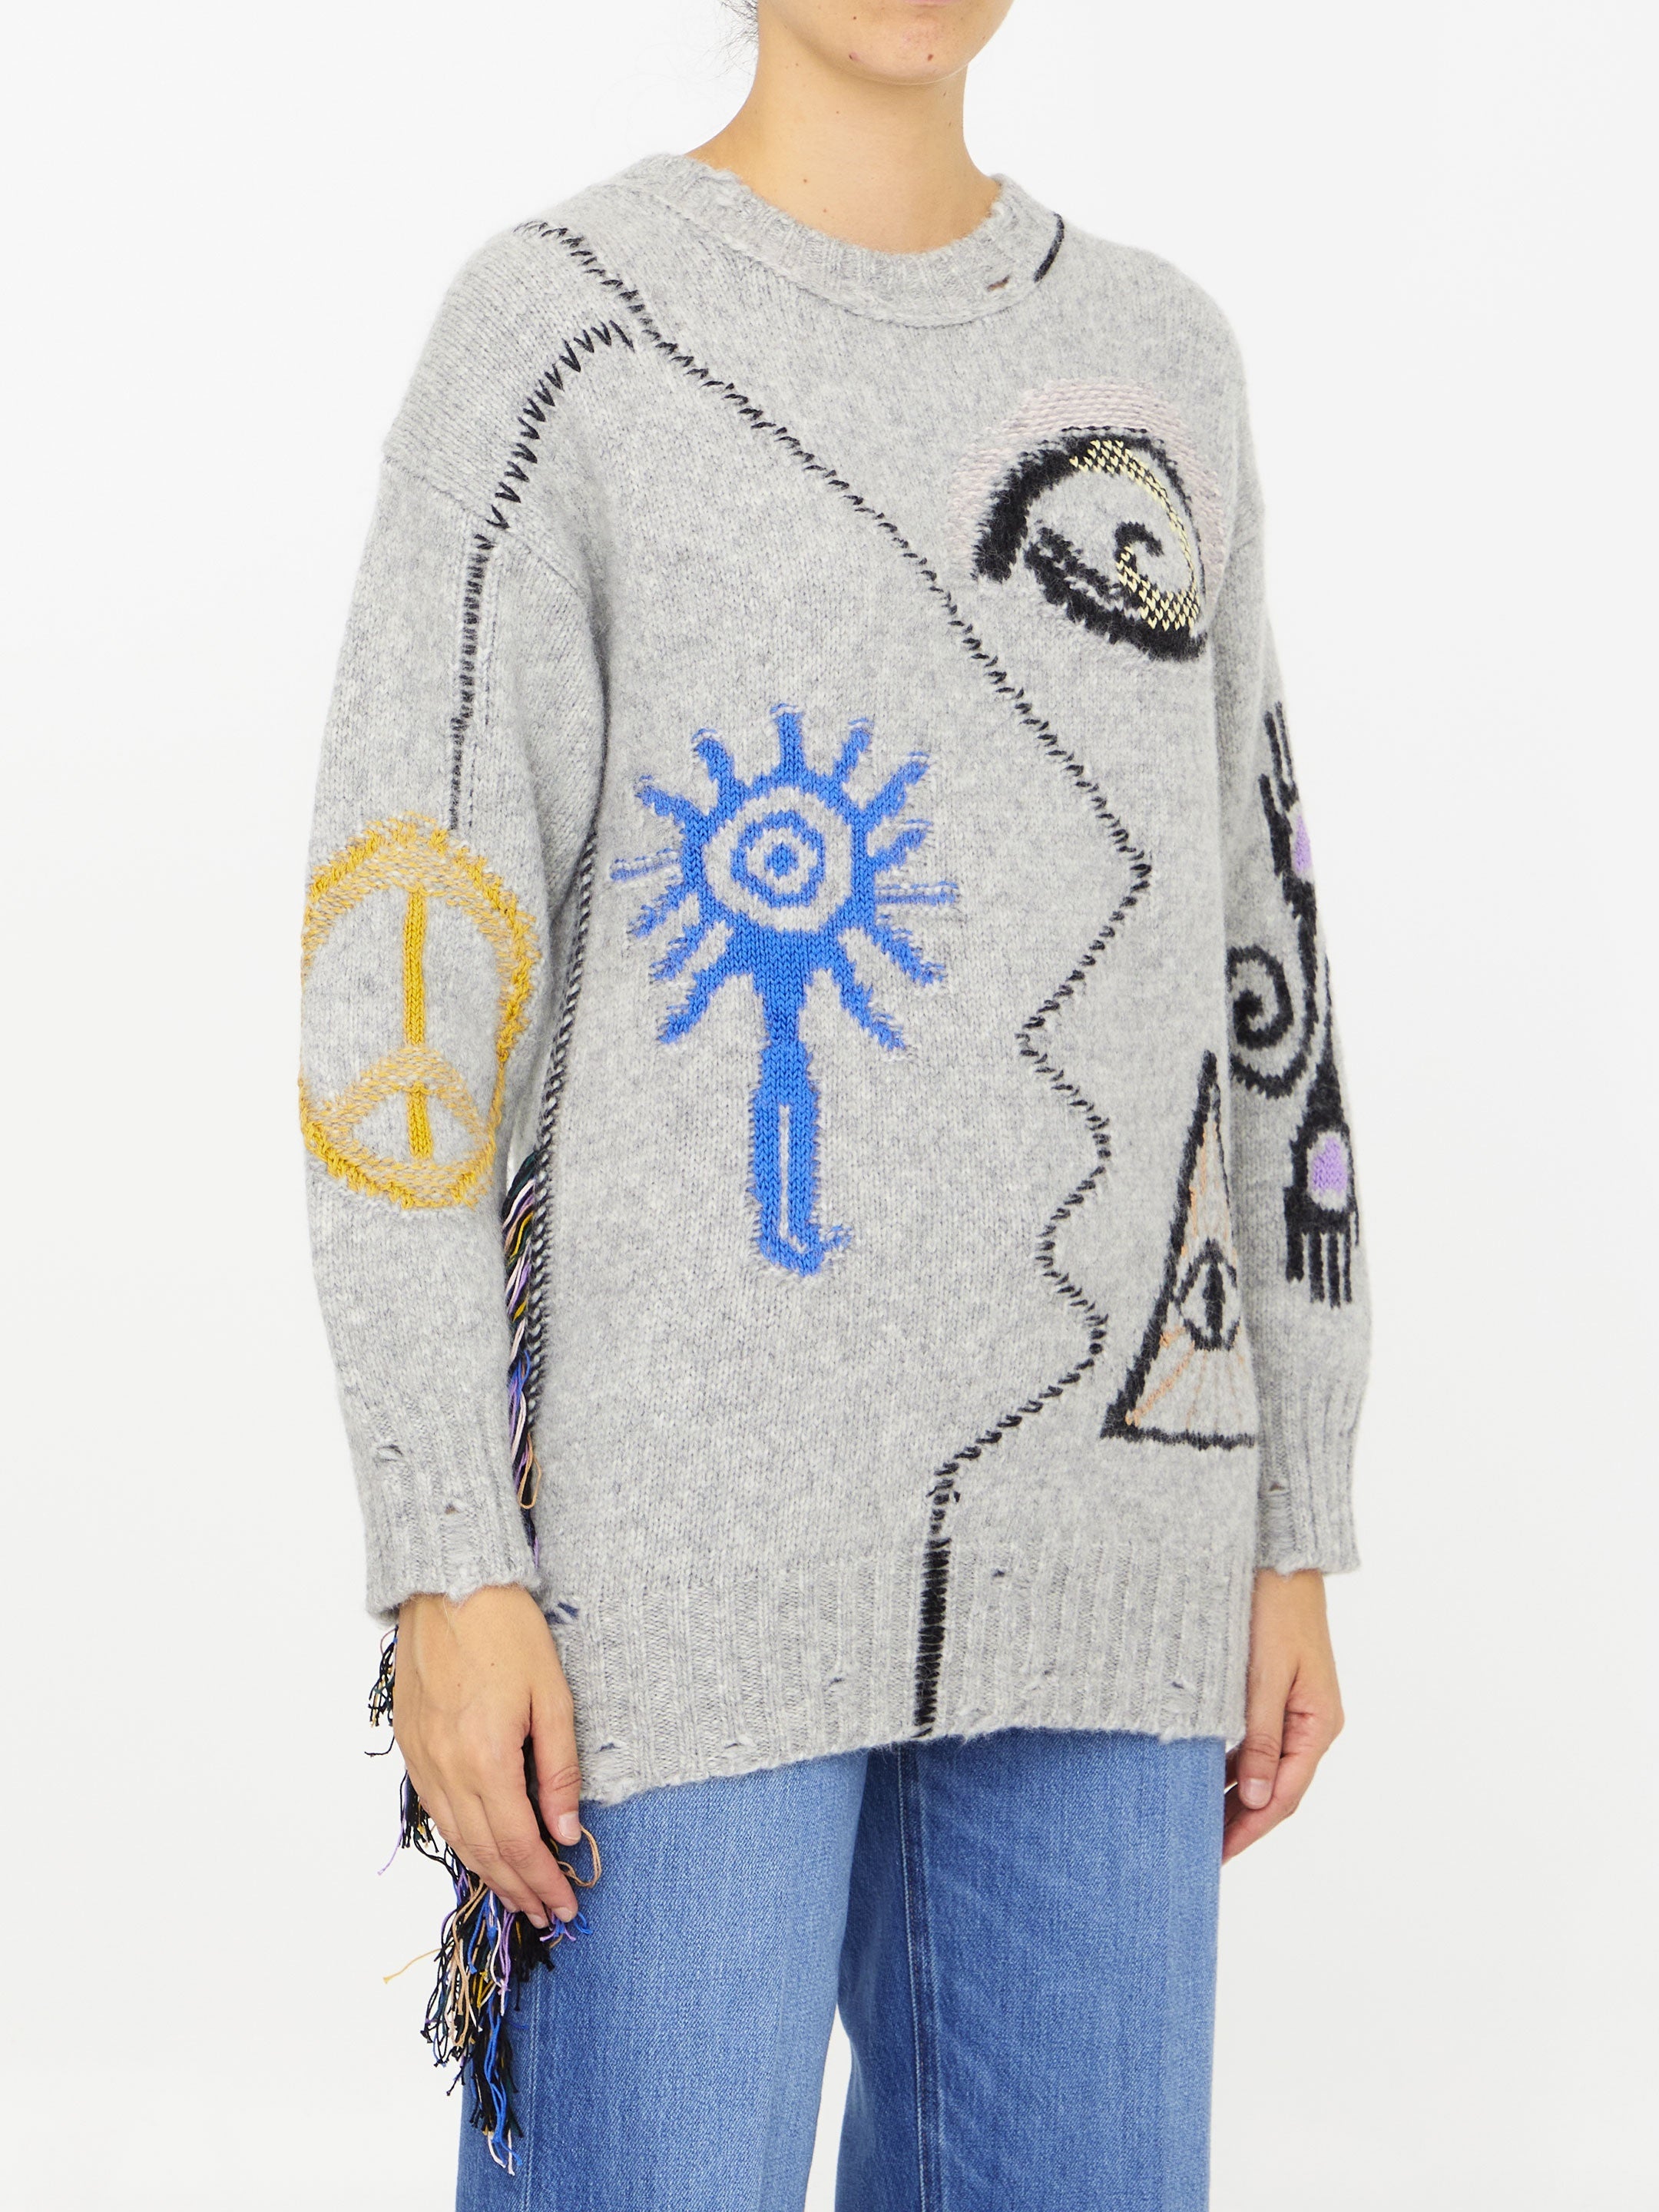 STELLA-MCCARTNEY-OUTLET-SALE-Folk-embroidery-jumper-Strick-ARCHIVE-COLLECTION-2.jpg